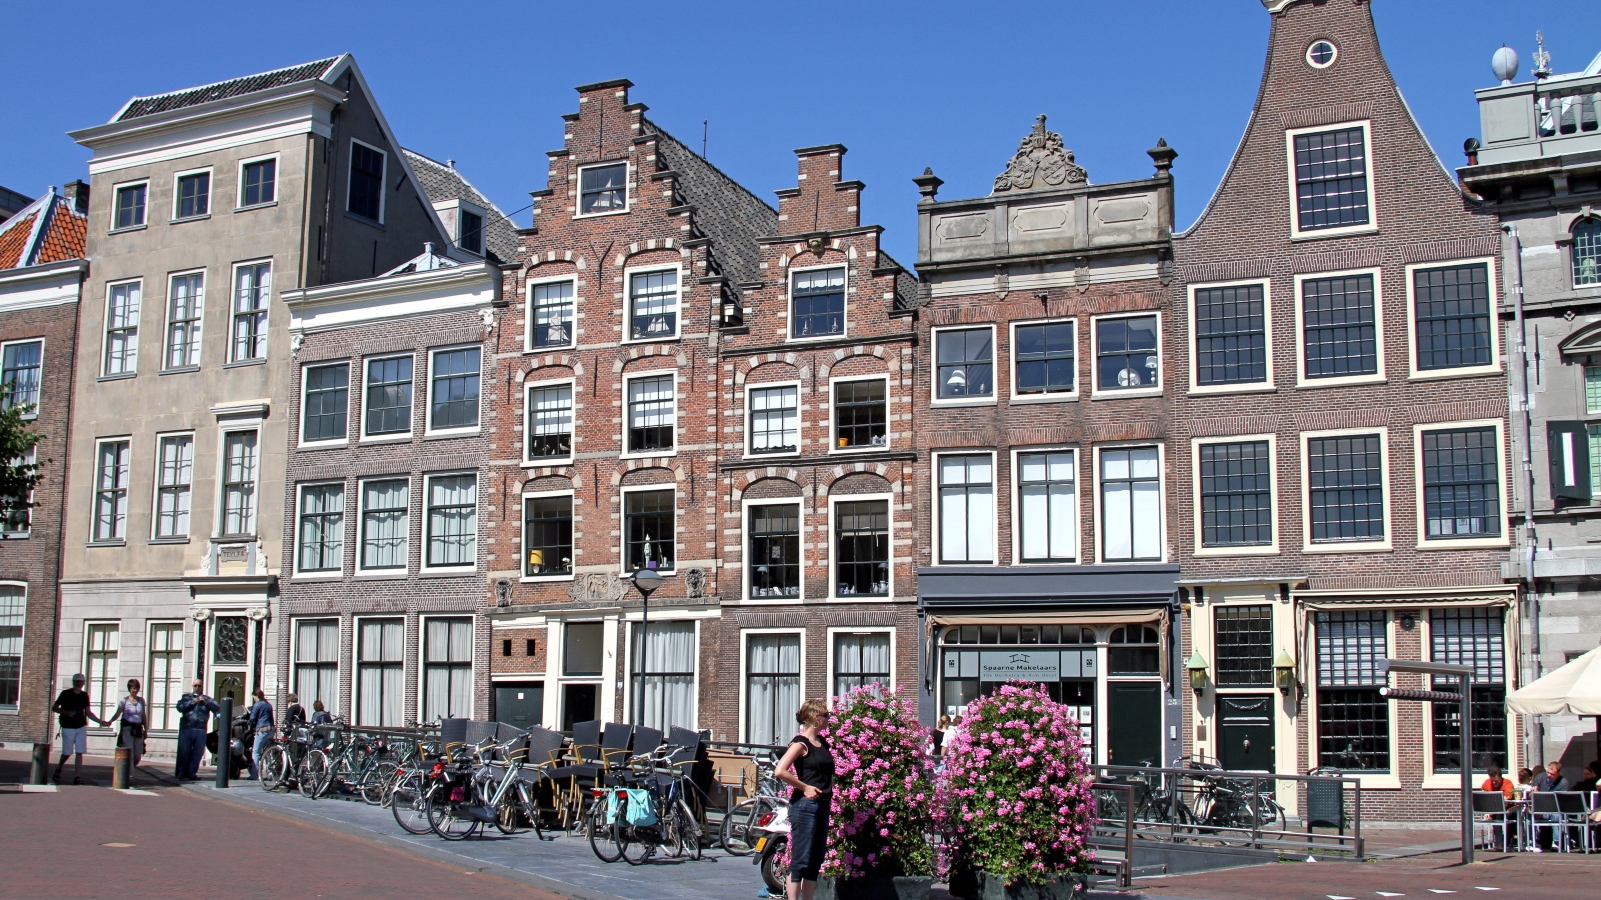 Haarlem in the Netherlands